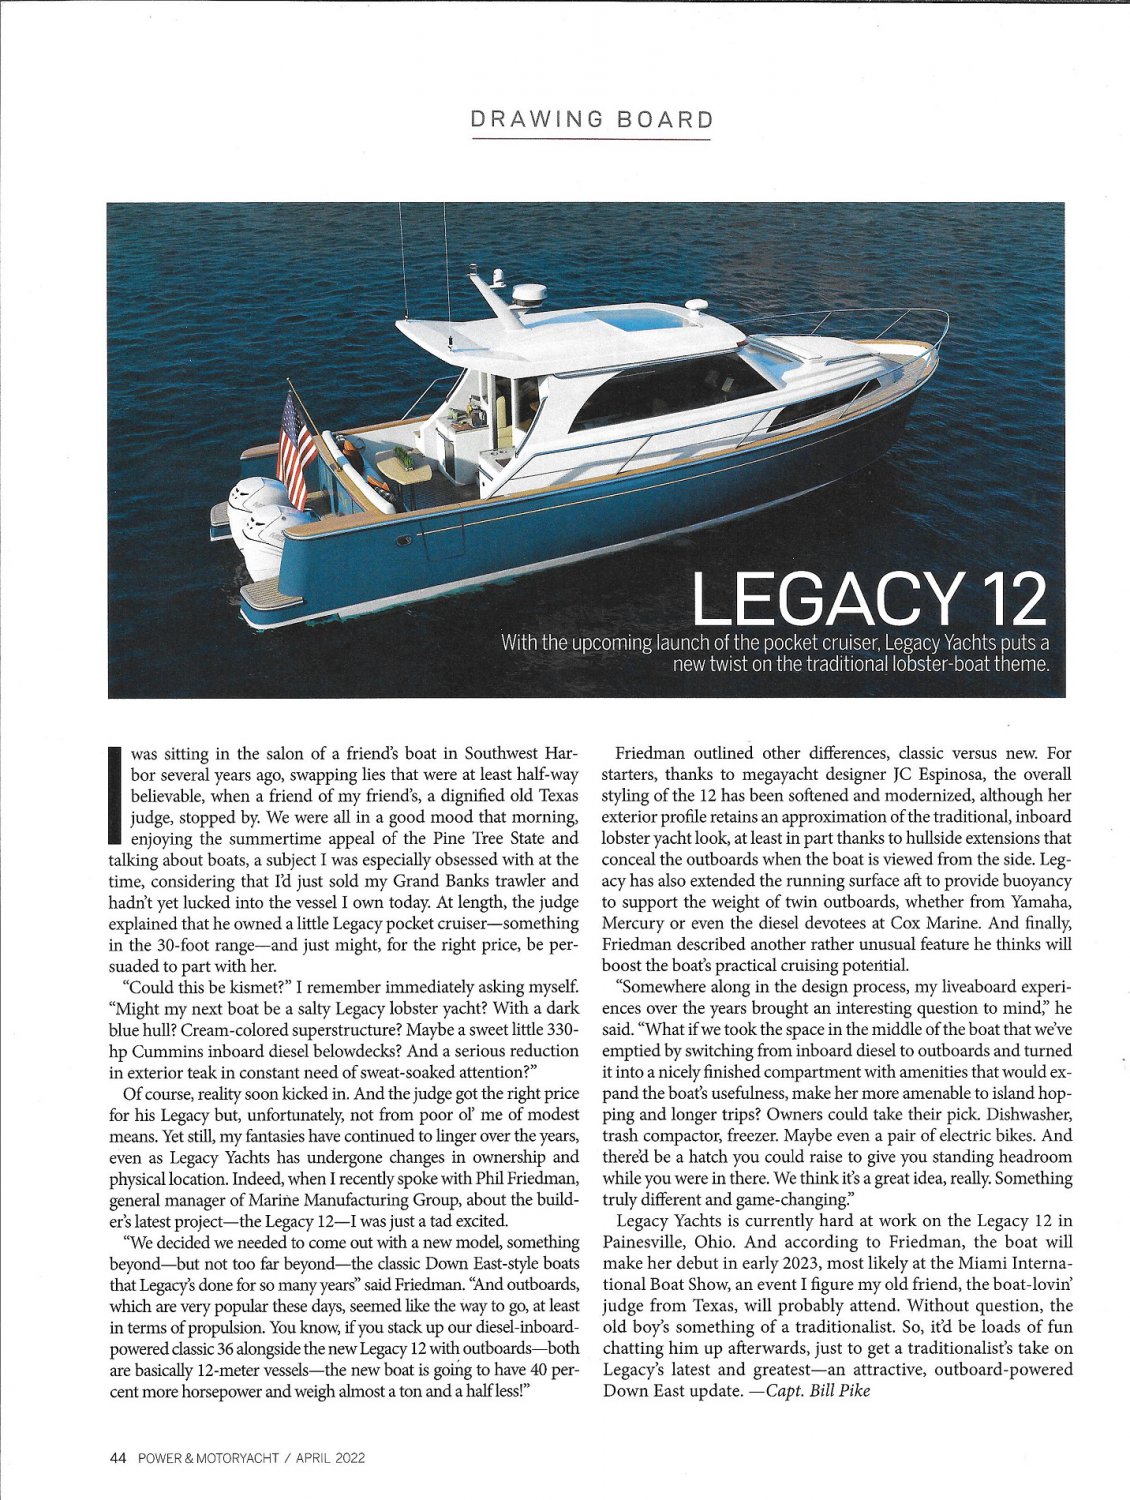 legacy 12 yacht price